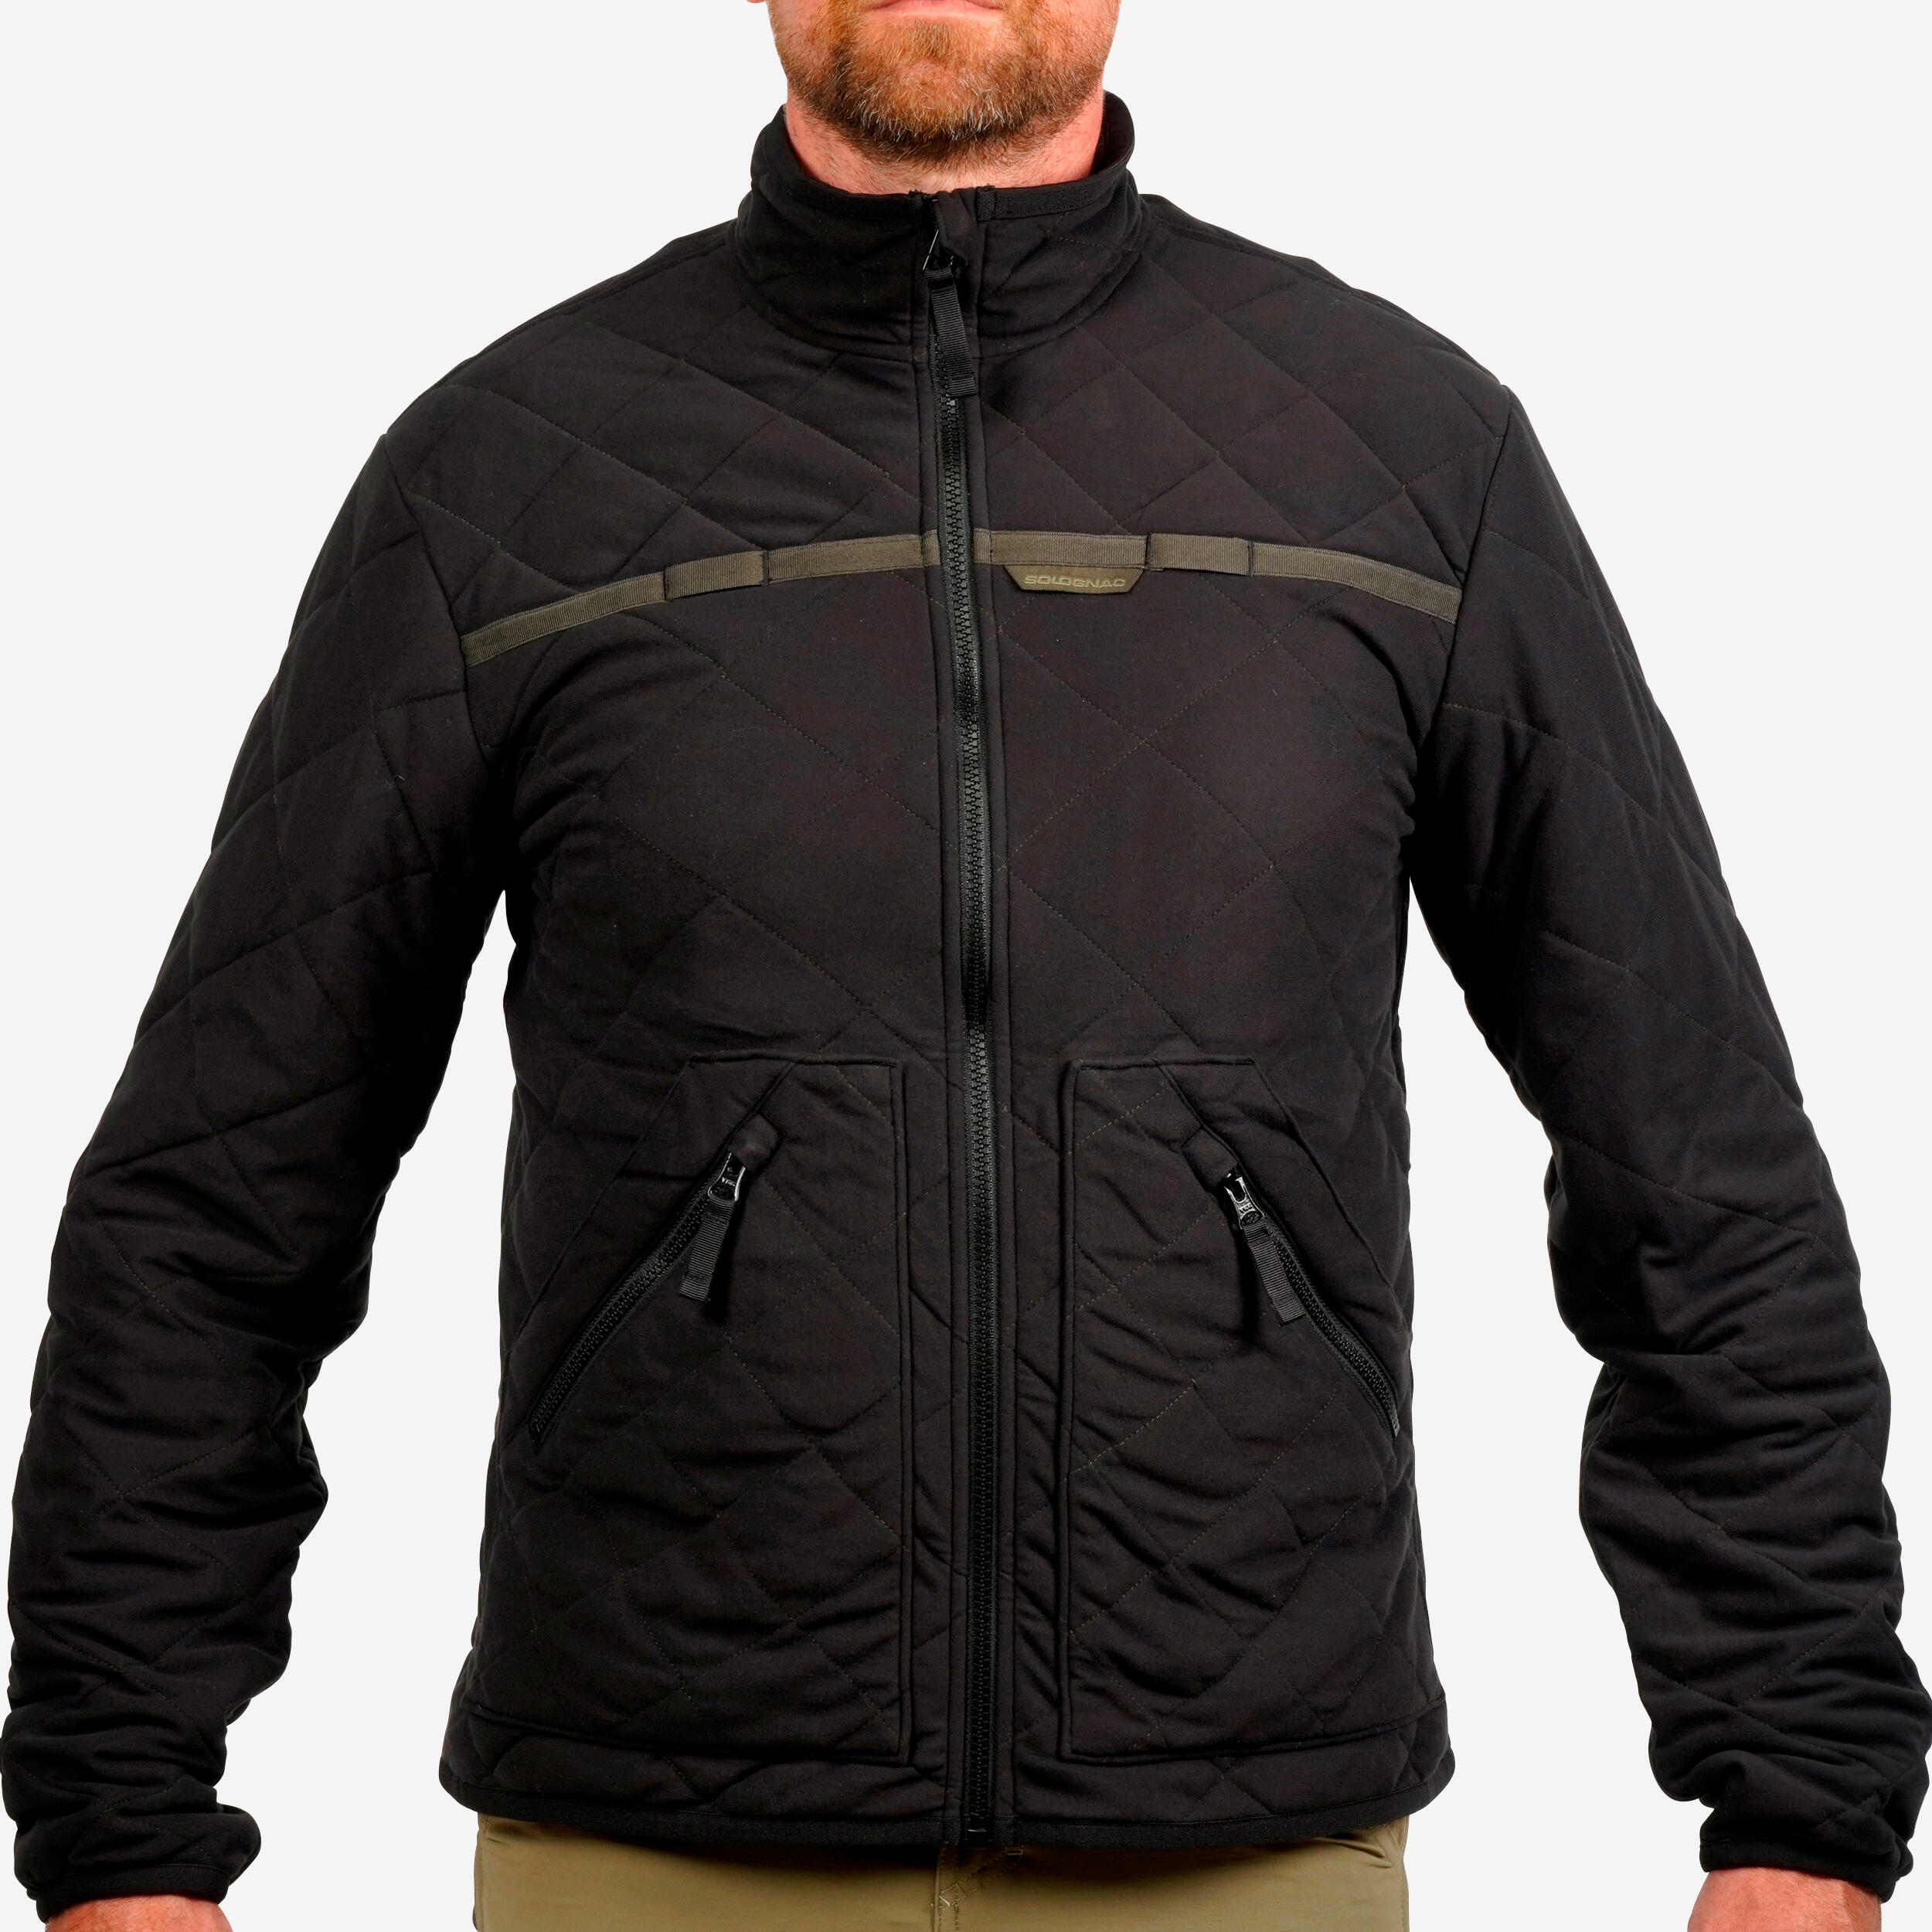 Decathlon - Tribord Raincoastal 100 jacket, black, 2016-17 collection |  Jackets, Motorcycle jacket, Decathlon